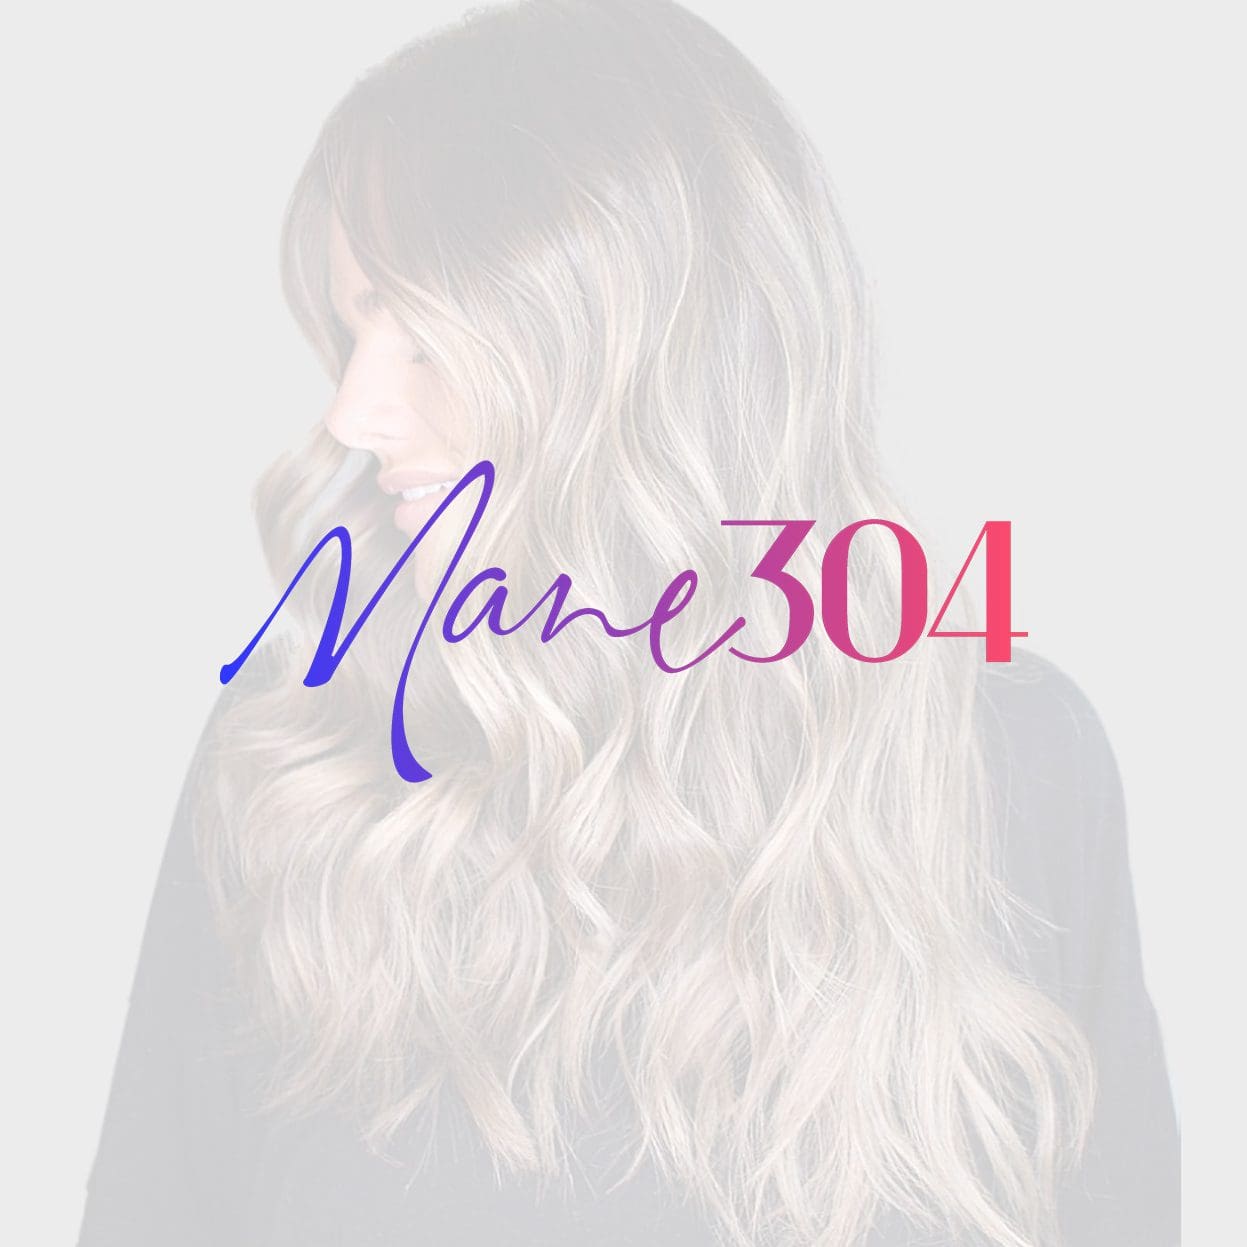 Mane 304 Logo - Nashville Web Design and Branding